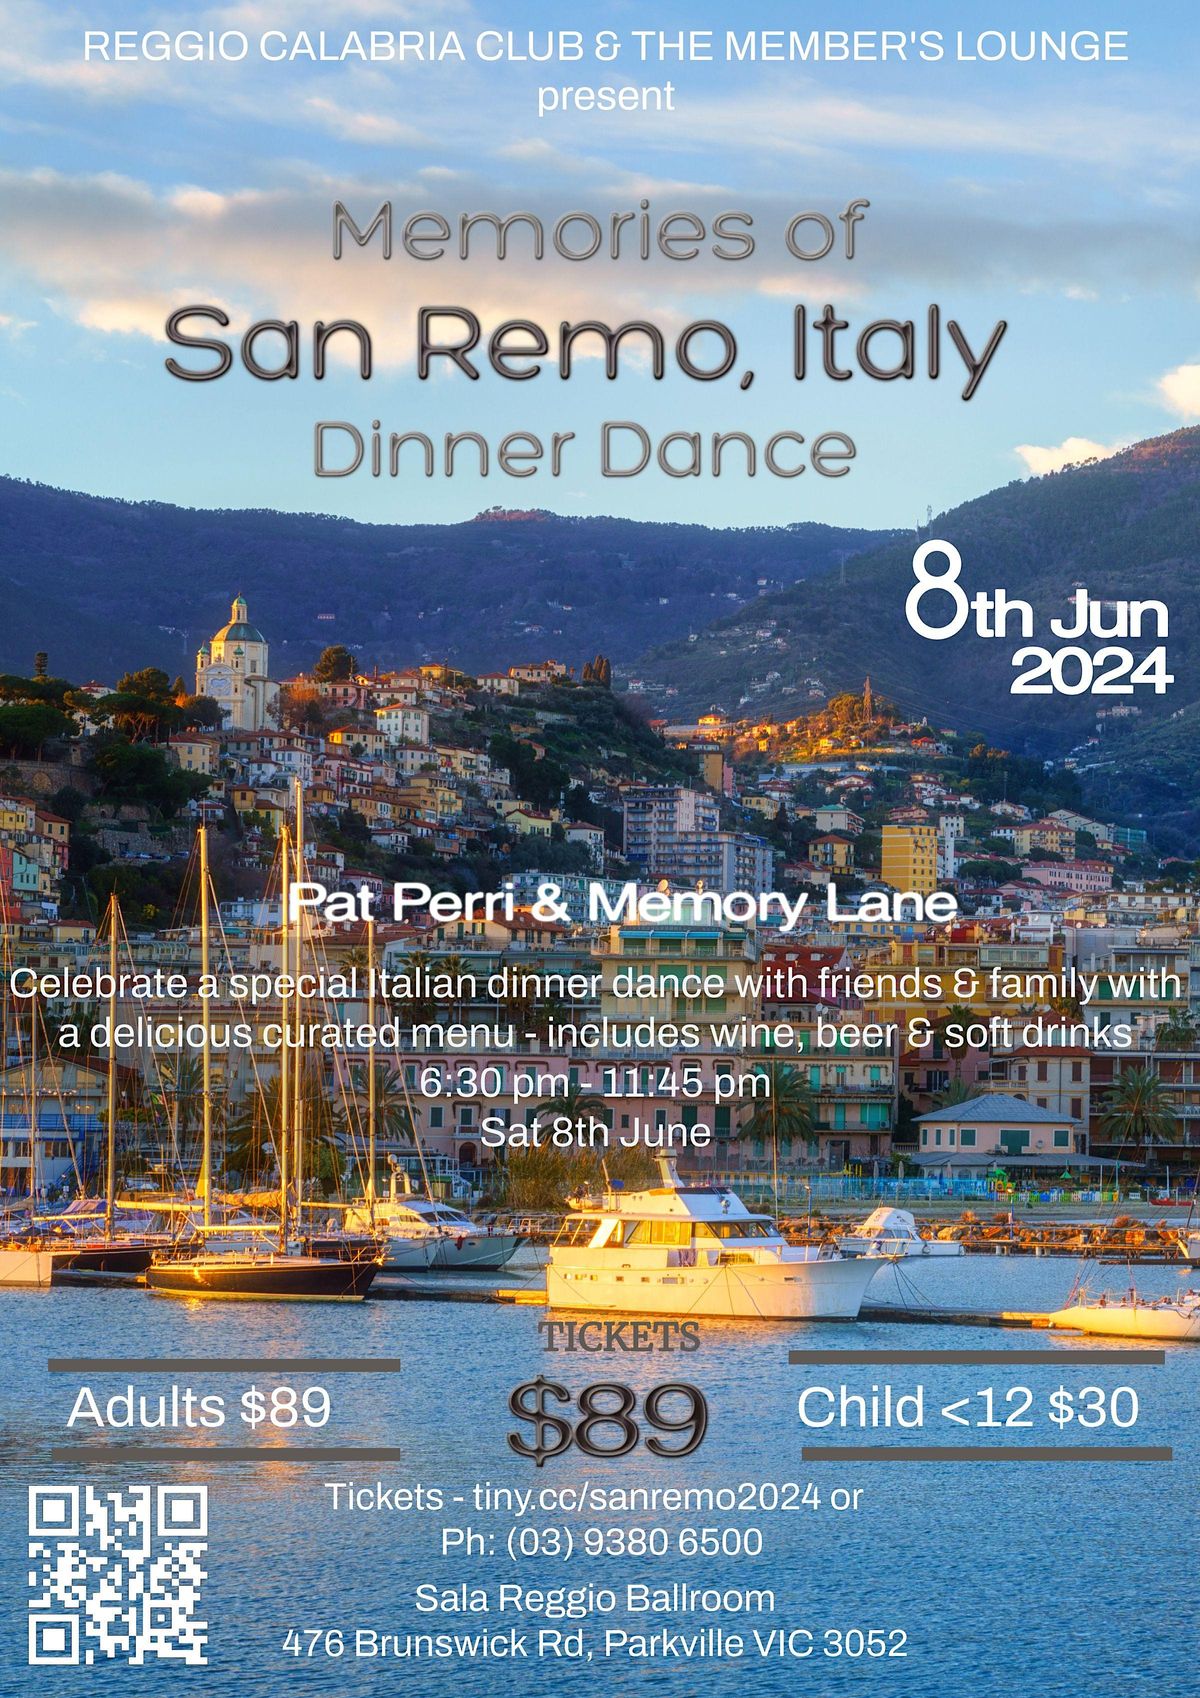 Memories of San Remo, Italy - Dinner Dance @ The Reggio Calabria Club